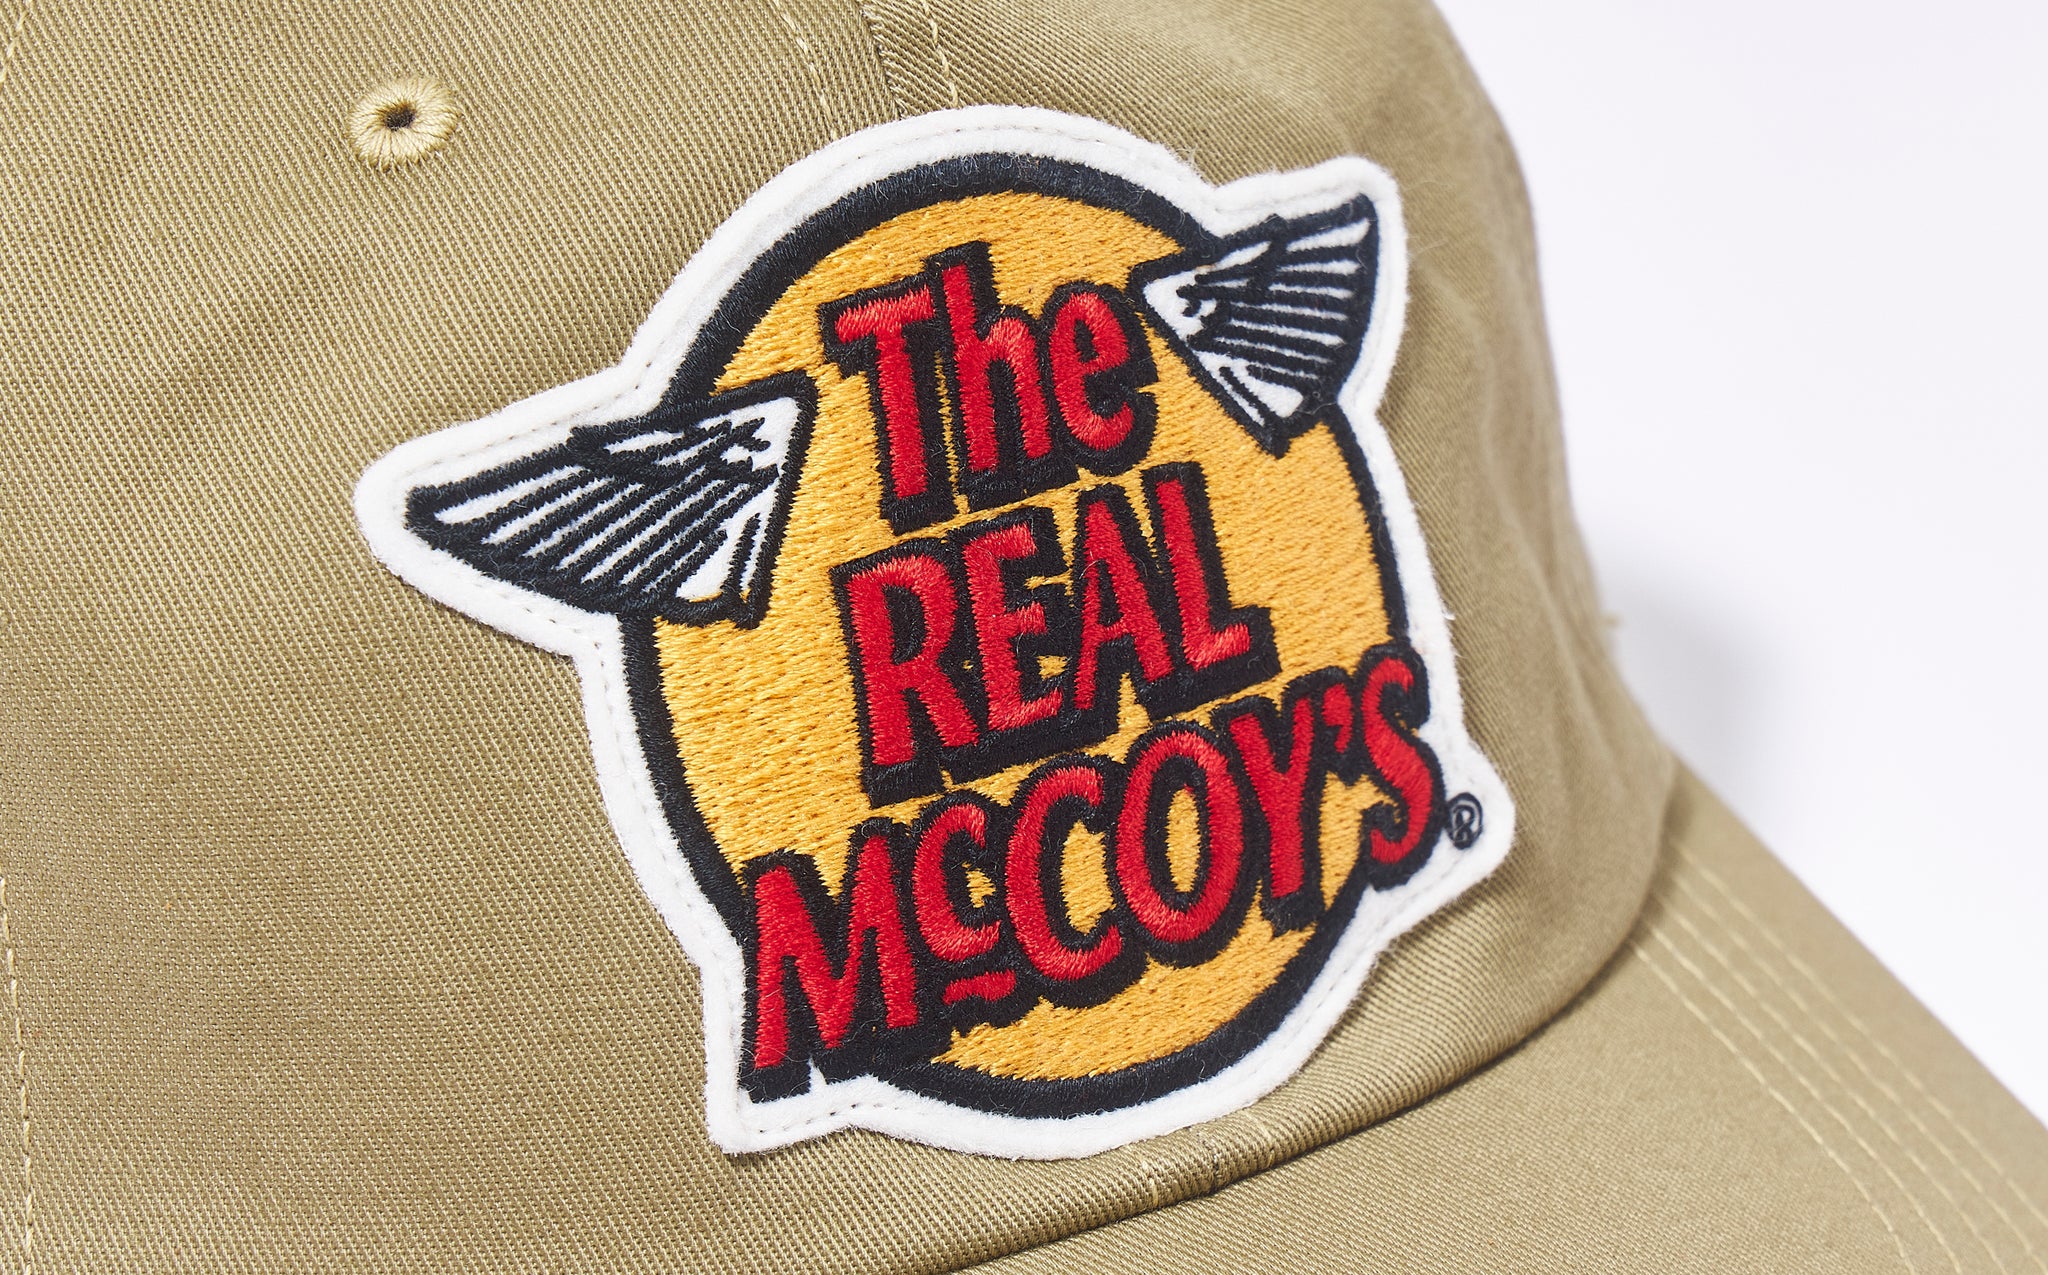 THE REAL McCOY'S LOGO BASEBALL CAP – The Real McCoy's